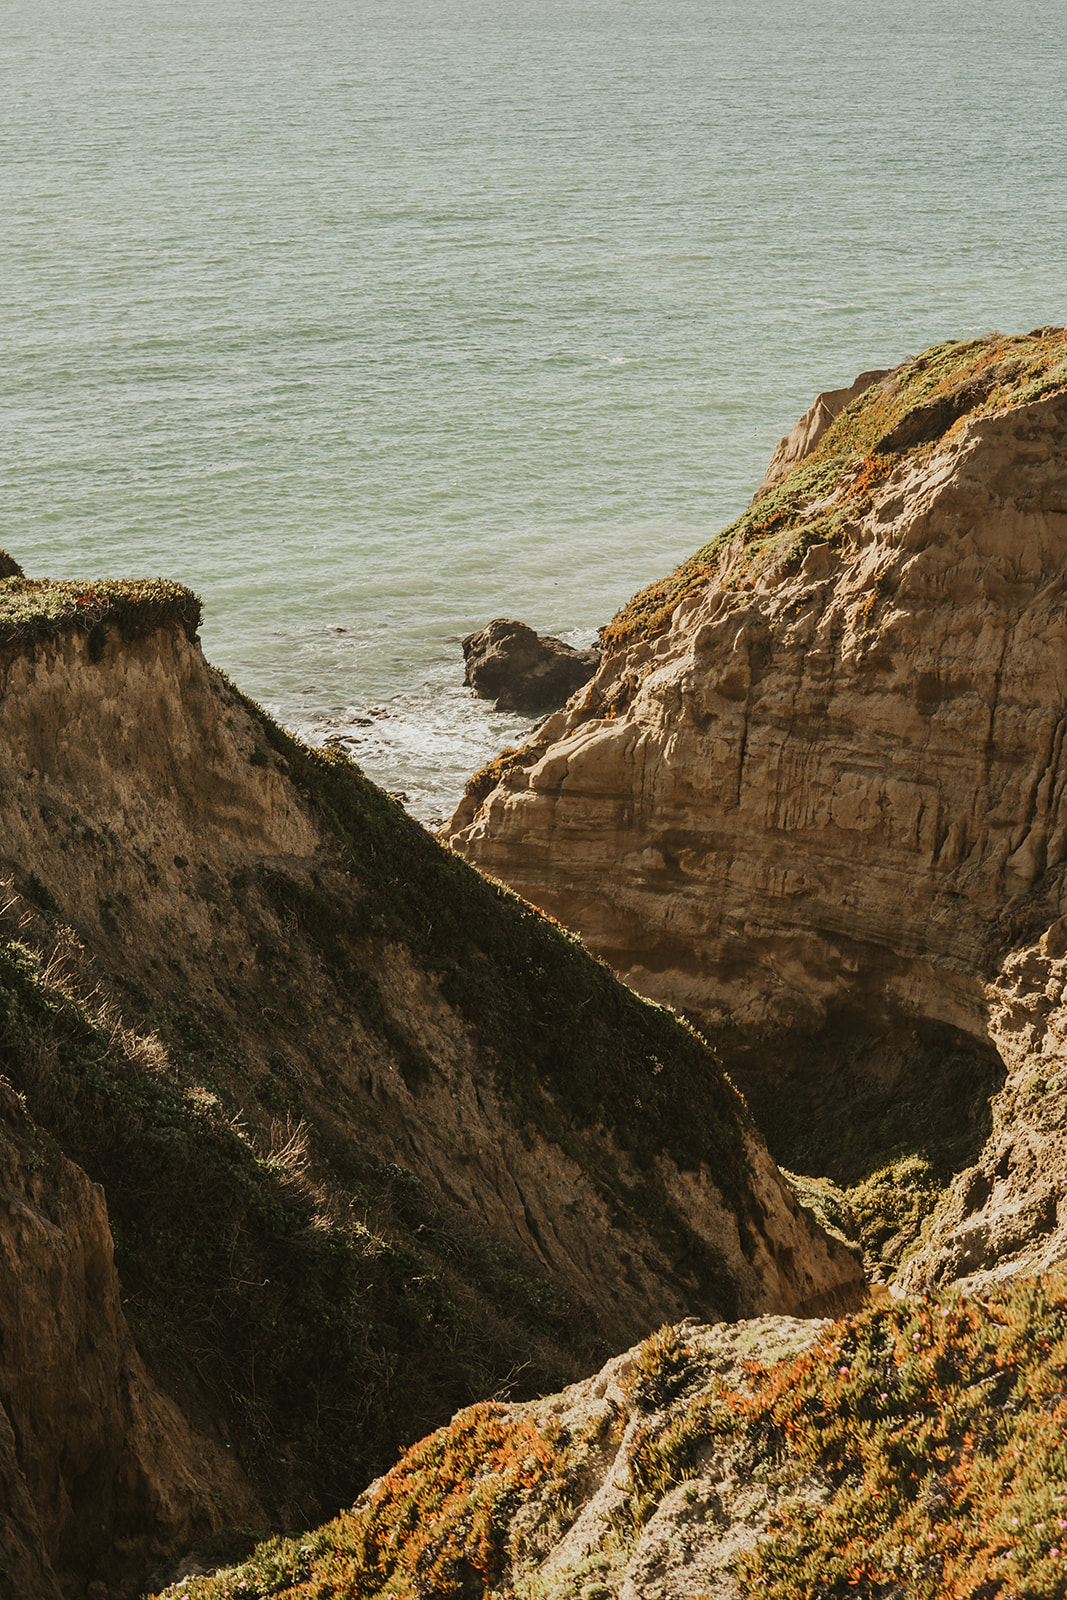 Cliffs overlooking the ocean, Pacifica, California